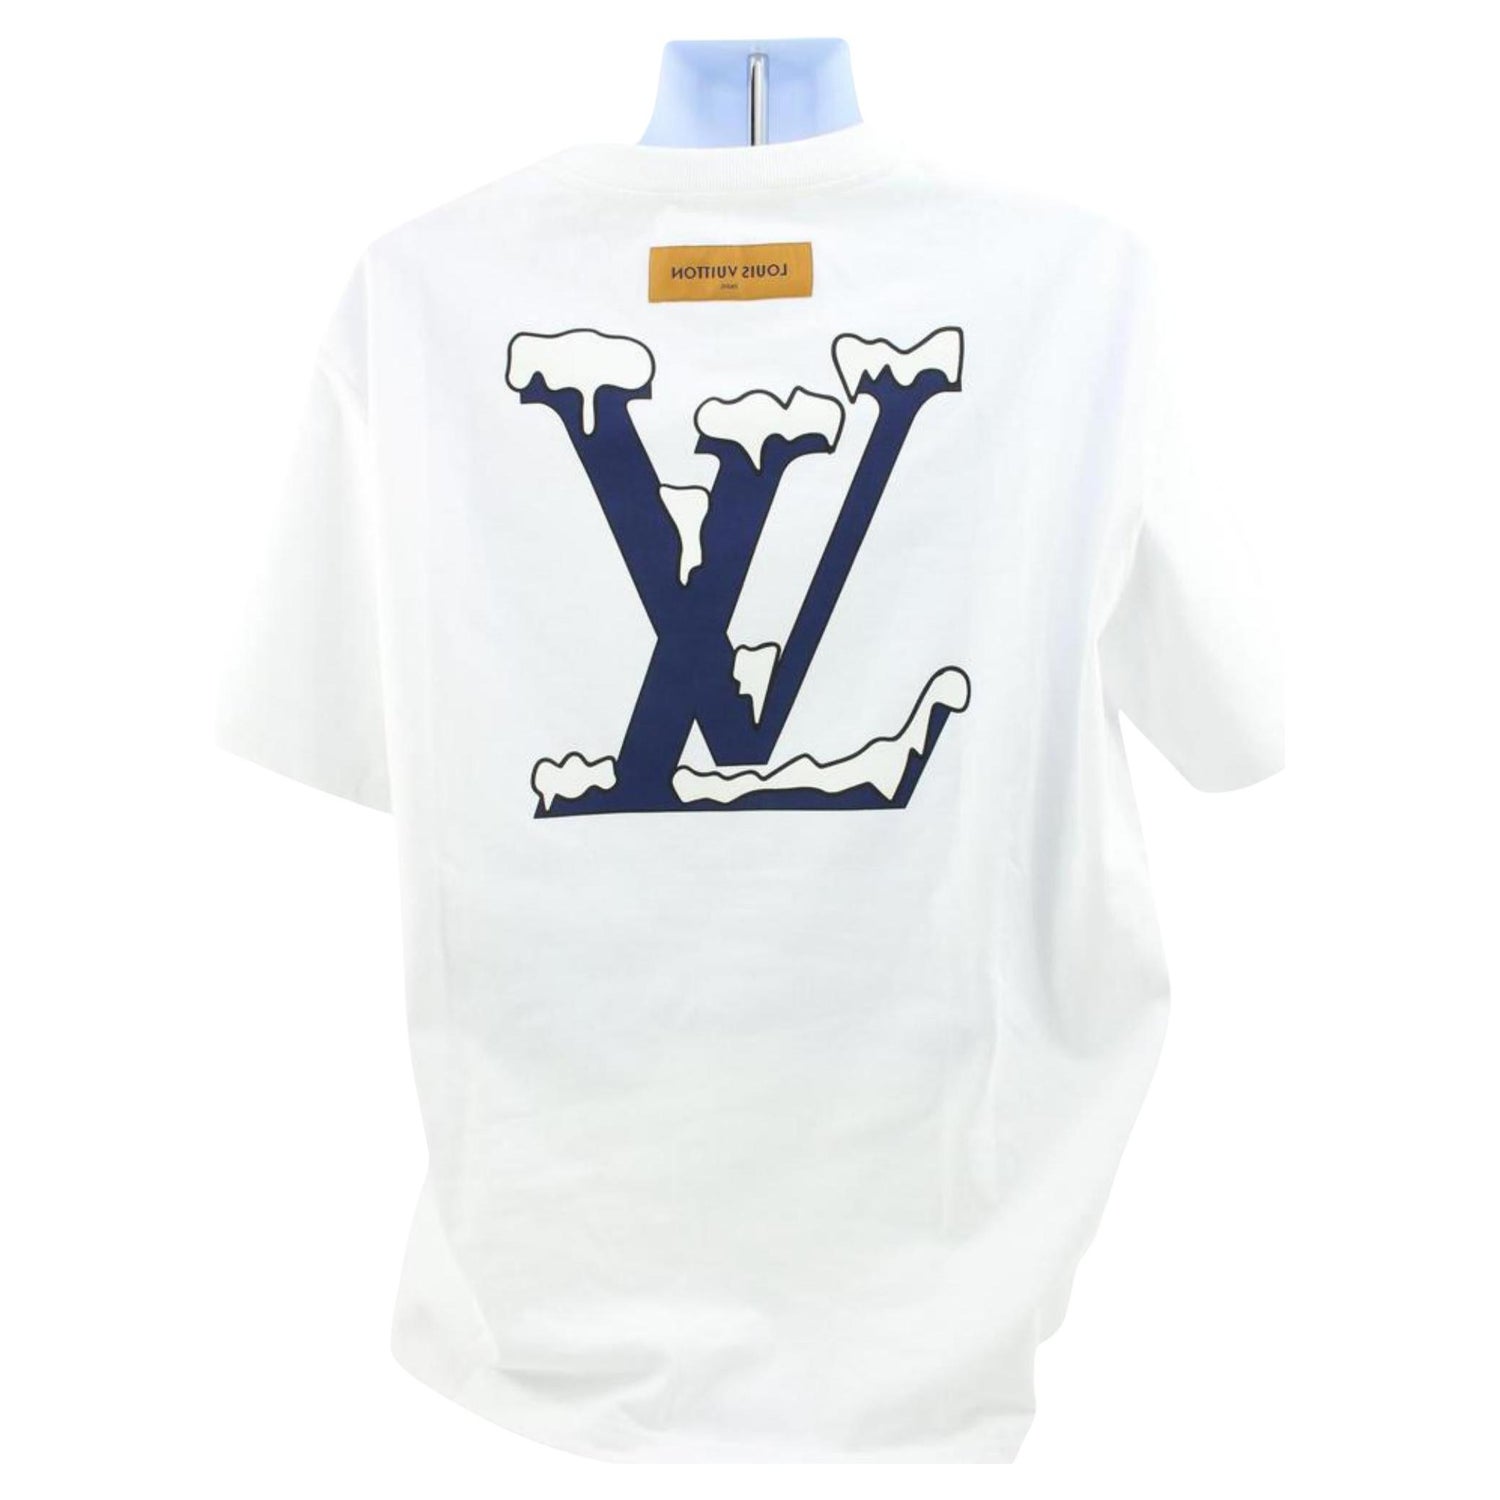 Louis Vuitton Navy Blue Monogram Printed Knit Polo T-Shirt XXL Louis Vuitton